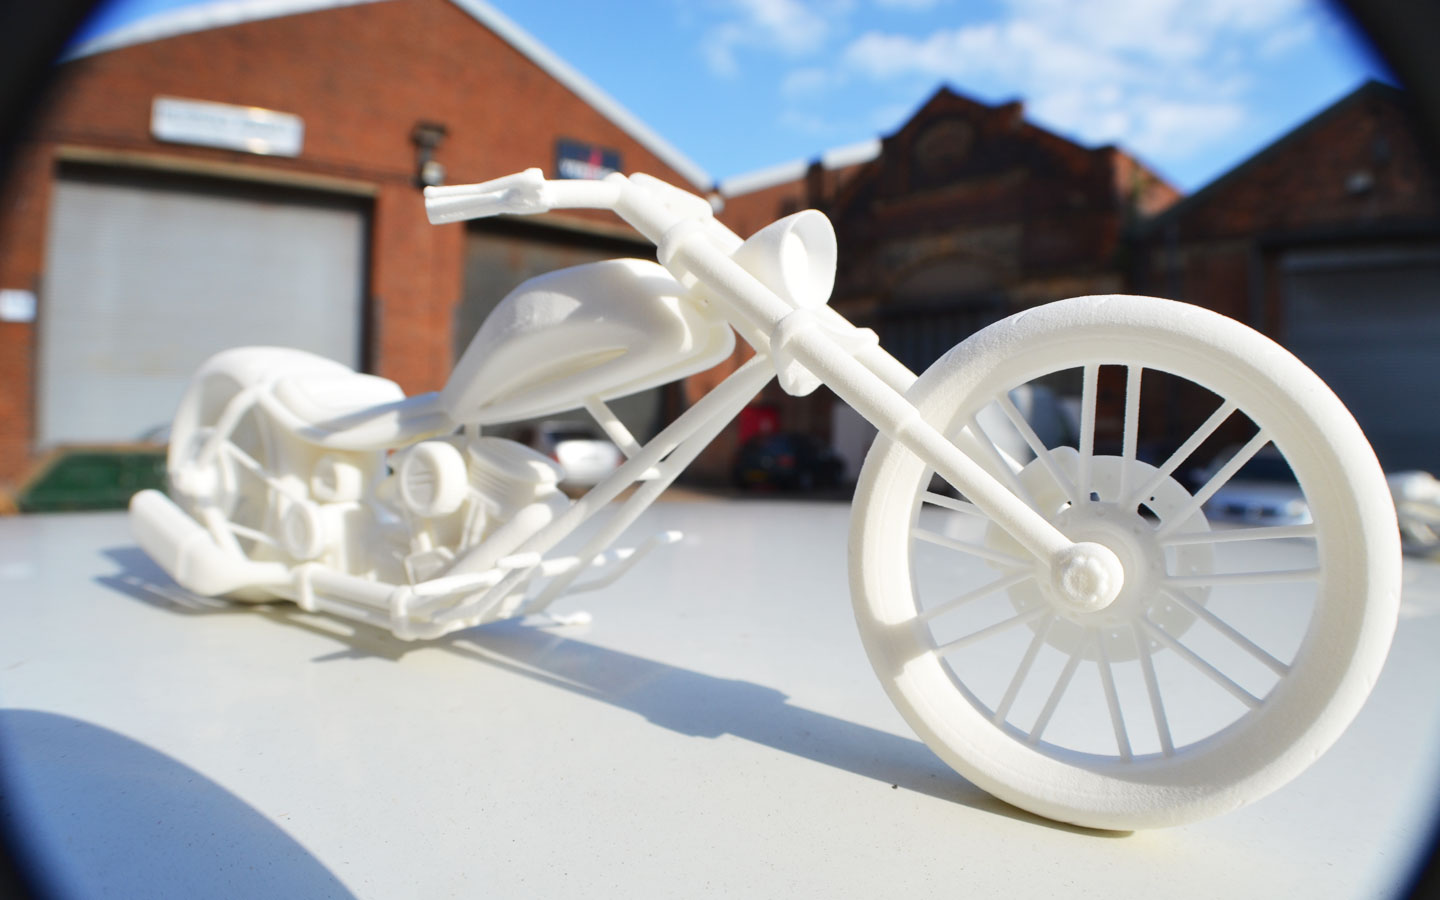 3D Printed Motocycle